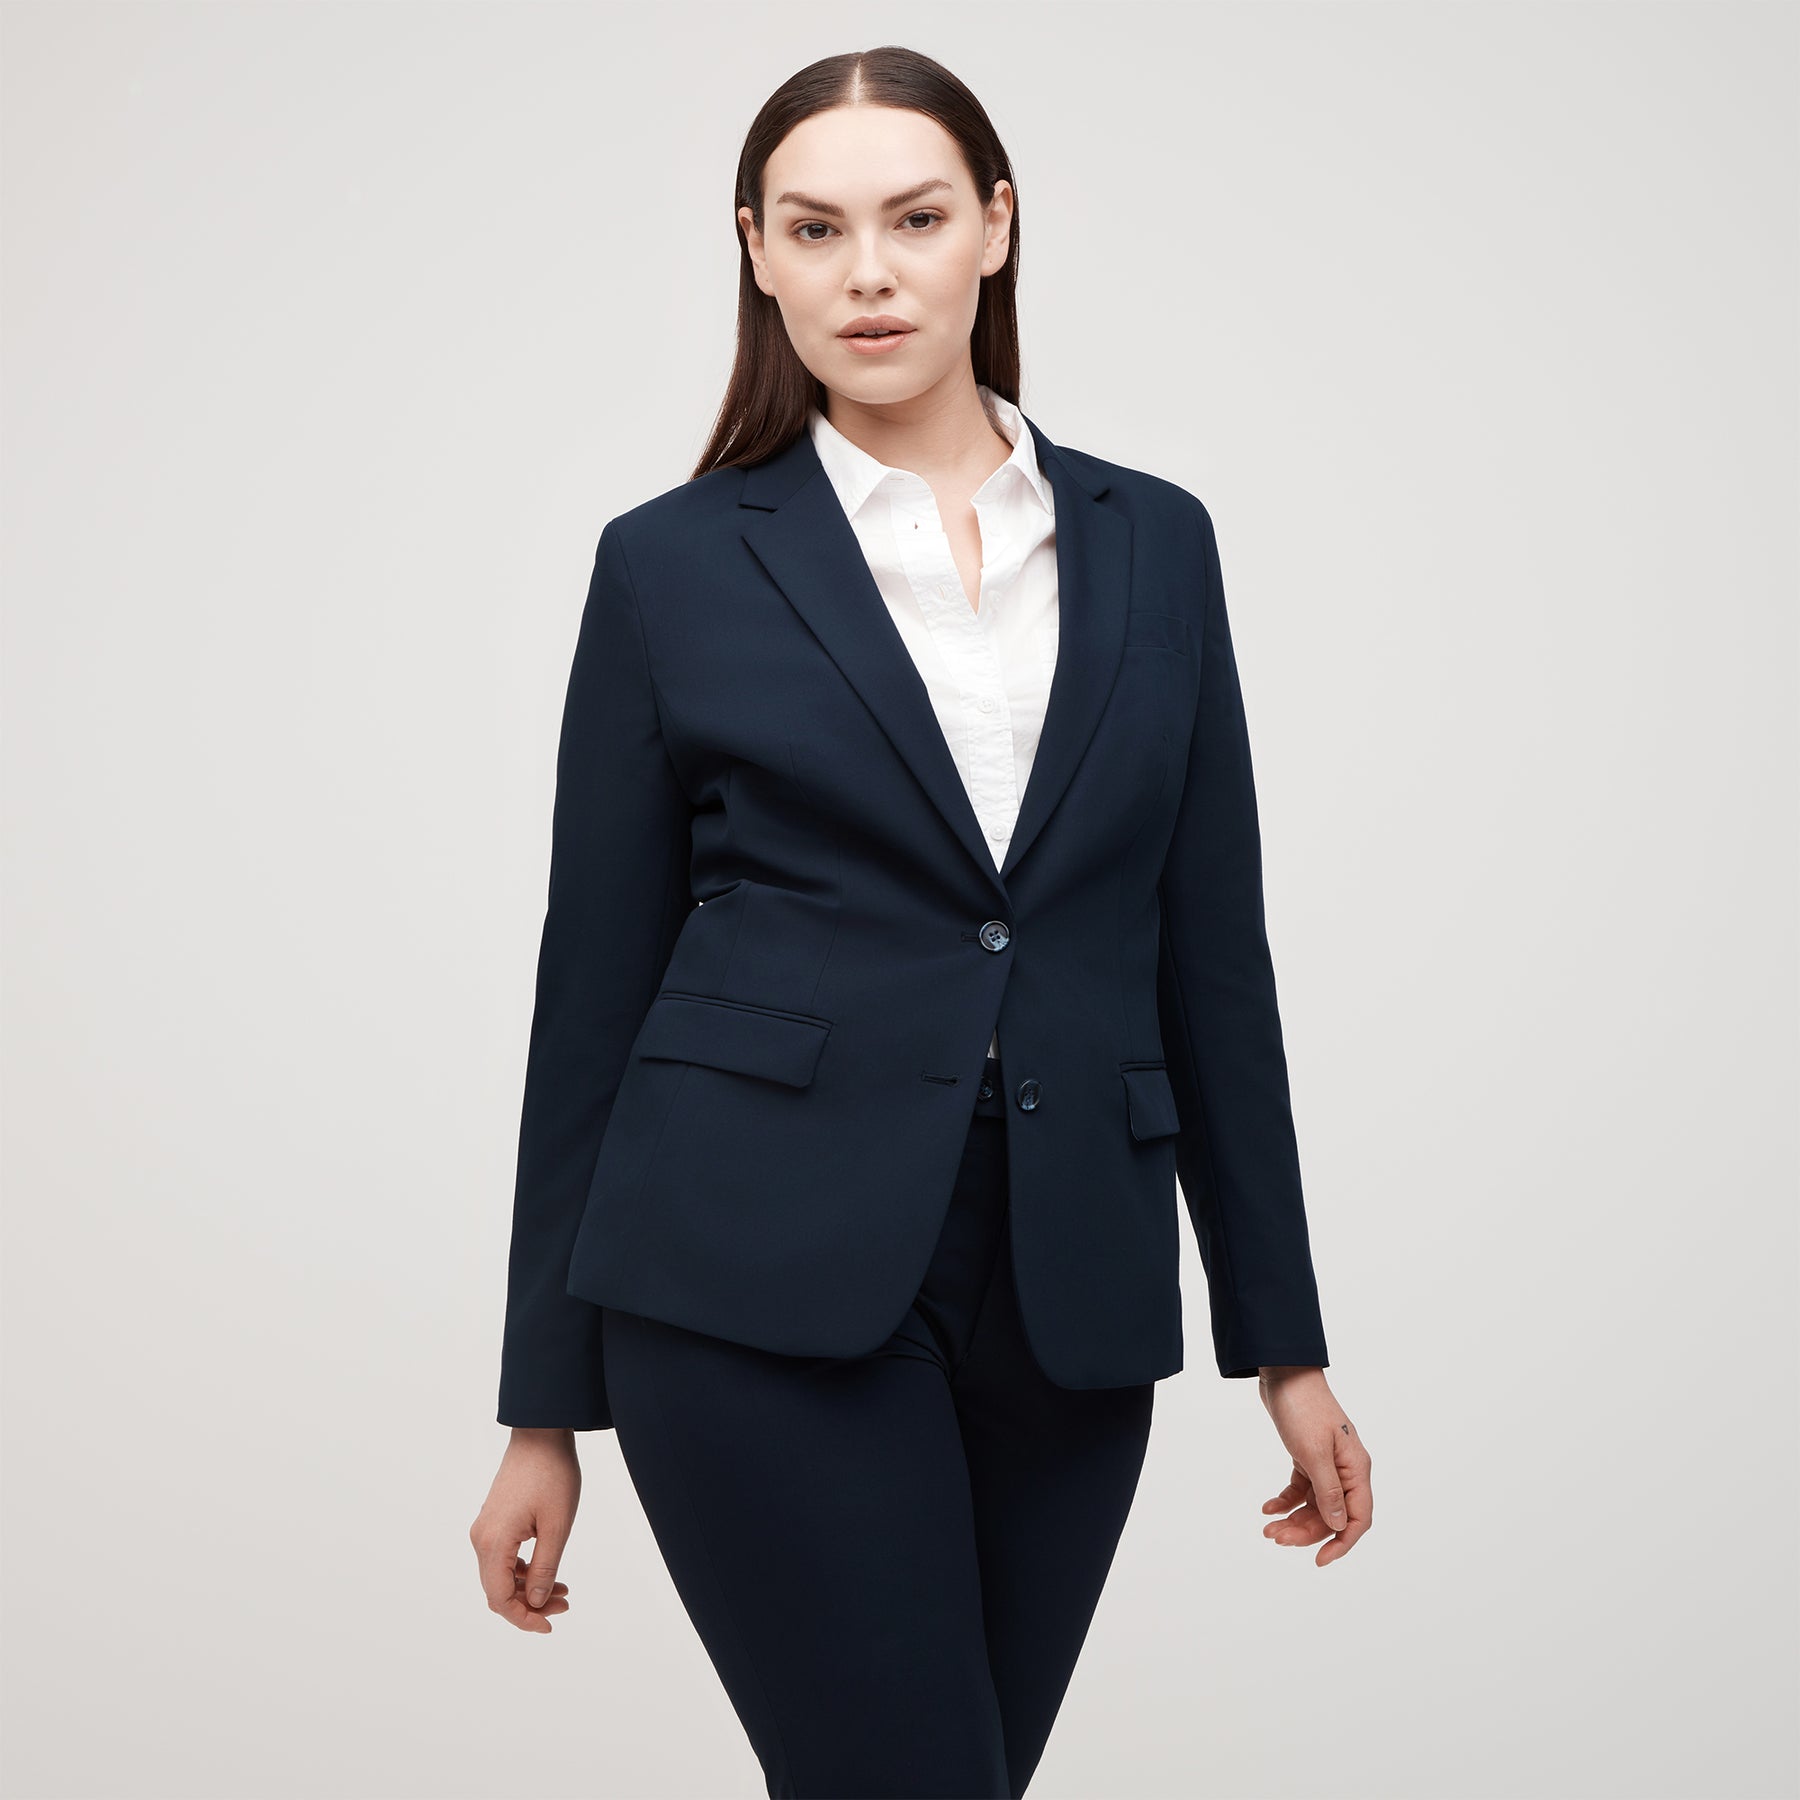 Women's Navy Suit | Suits for Work, Weddings & More